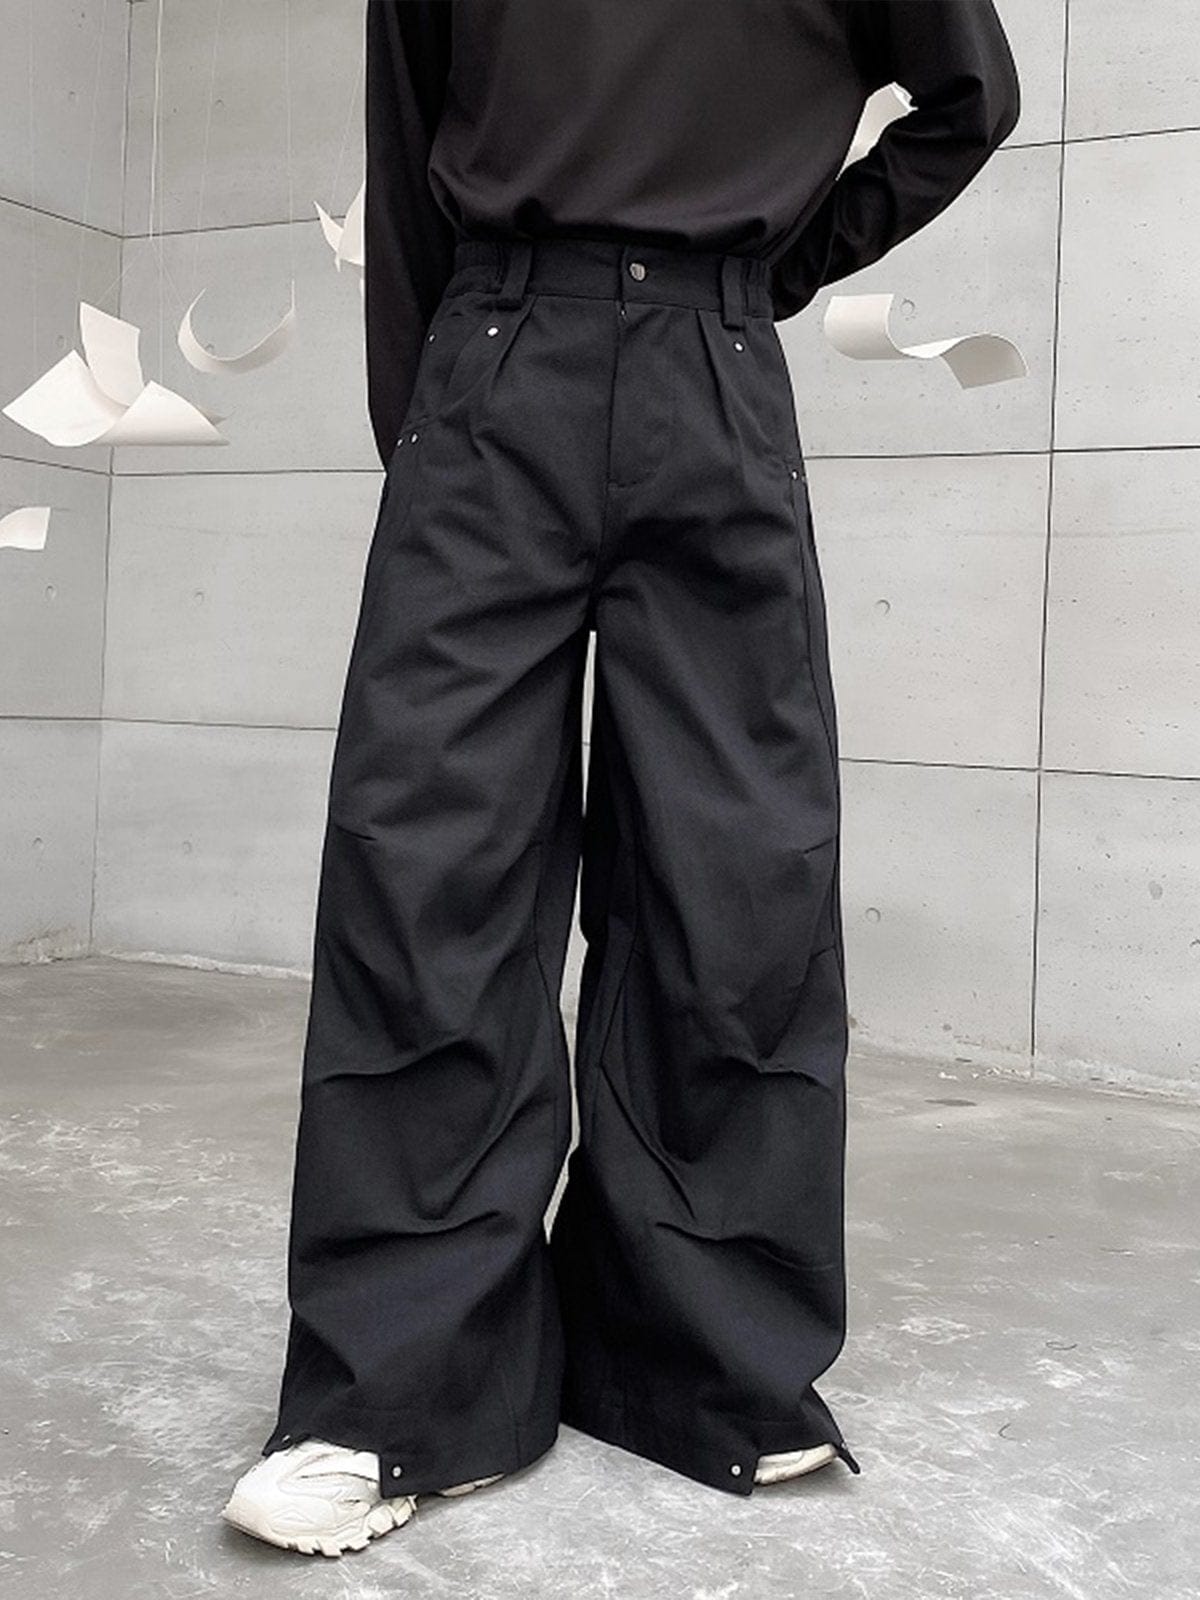 Dark Fold Pants Streetwear Brand Techwear Combat Tactical YUGEN THEORY